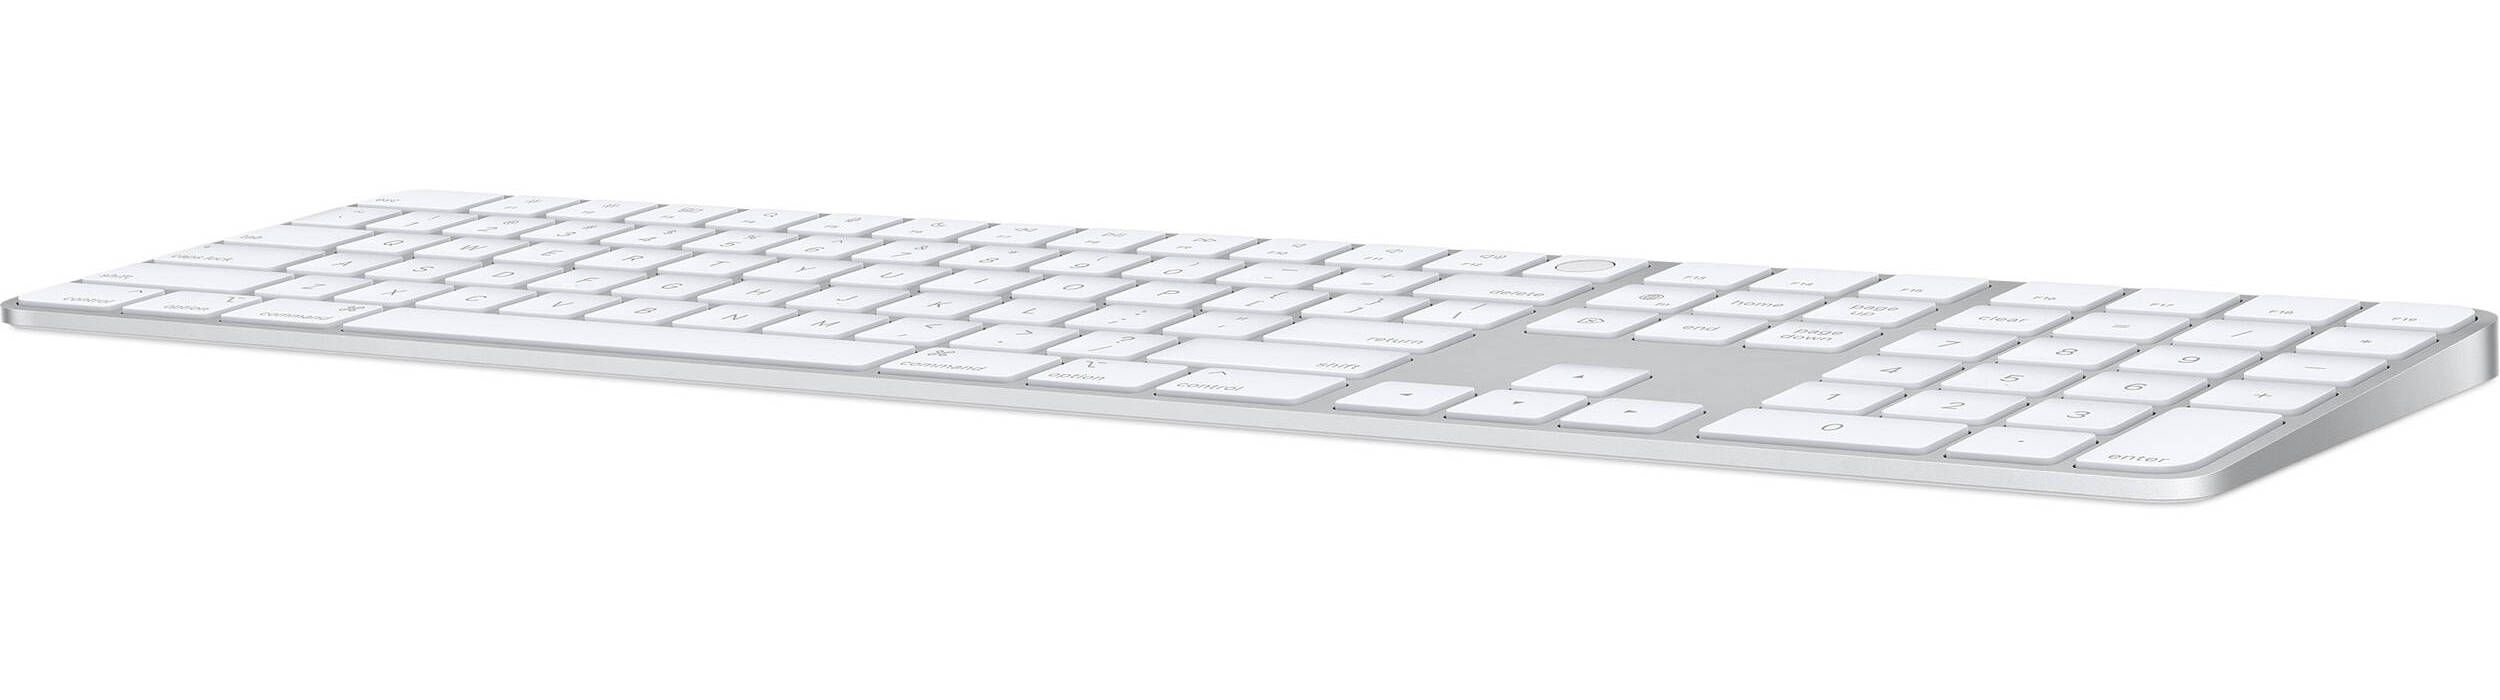 Клавиатура Apple Magic Keyboard с Touch ID и цифровой панелью, серебристый+белый— фото №1